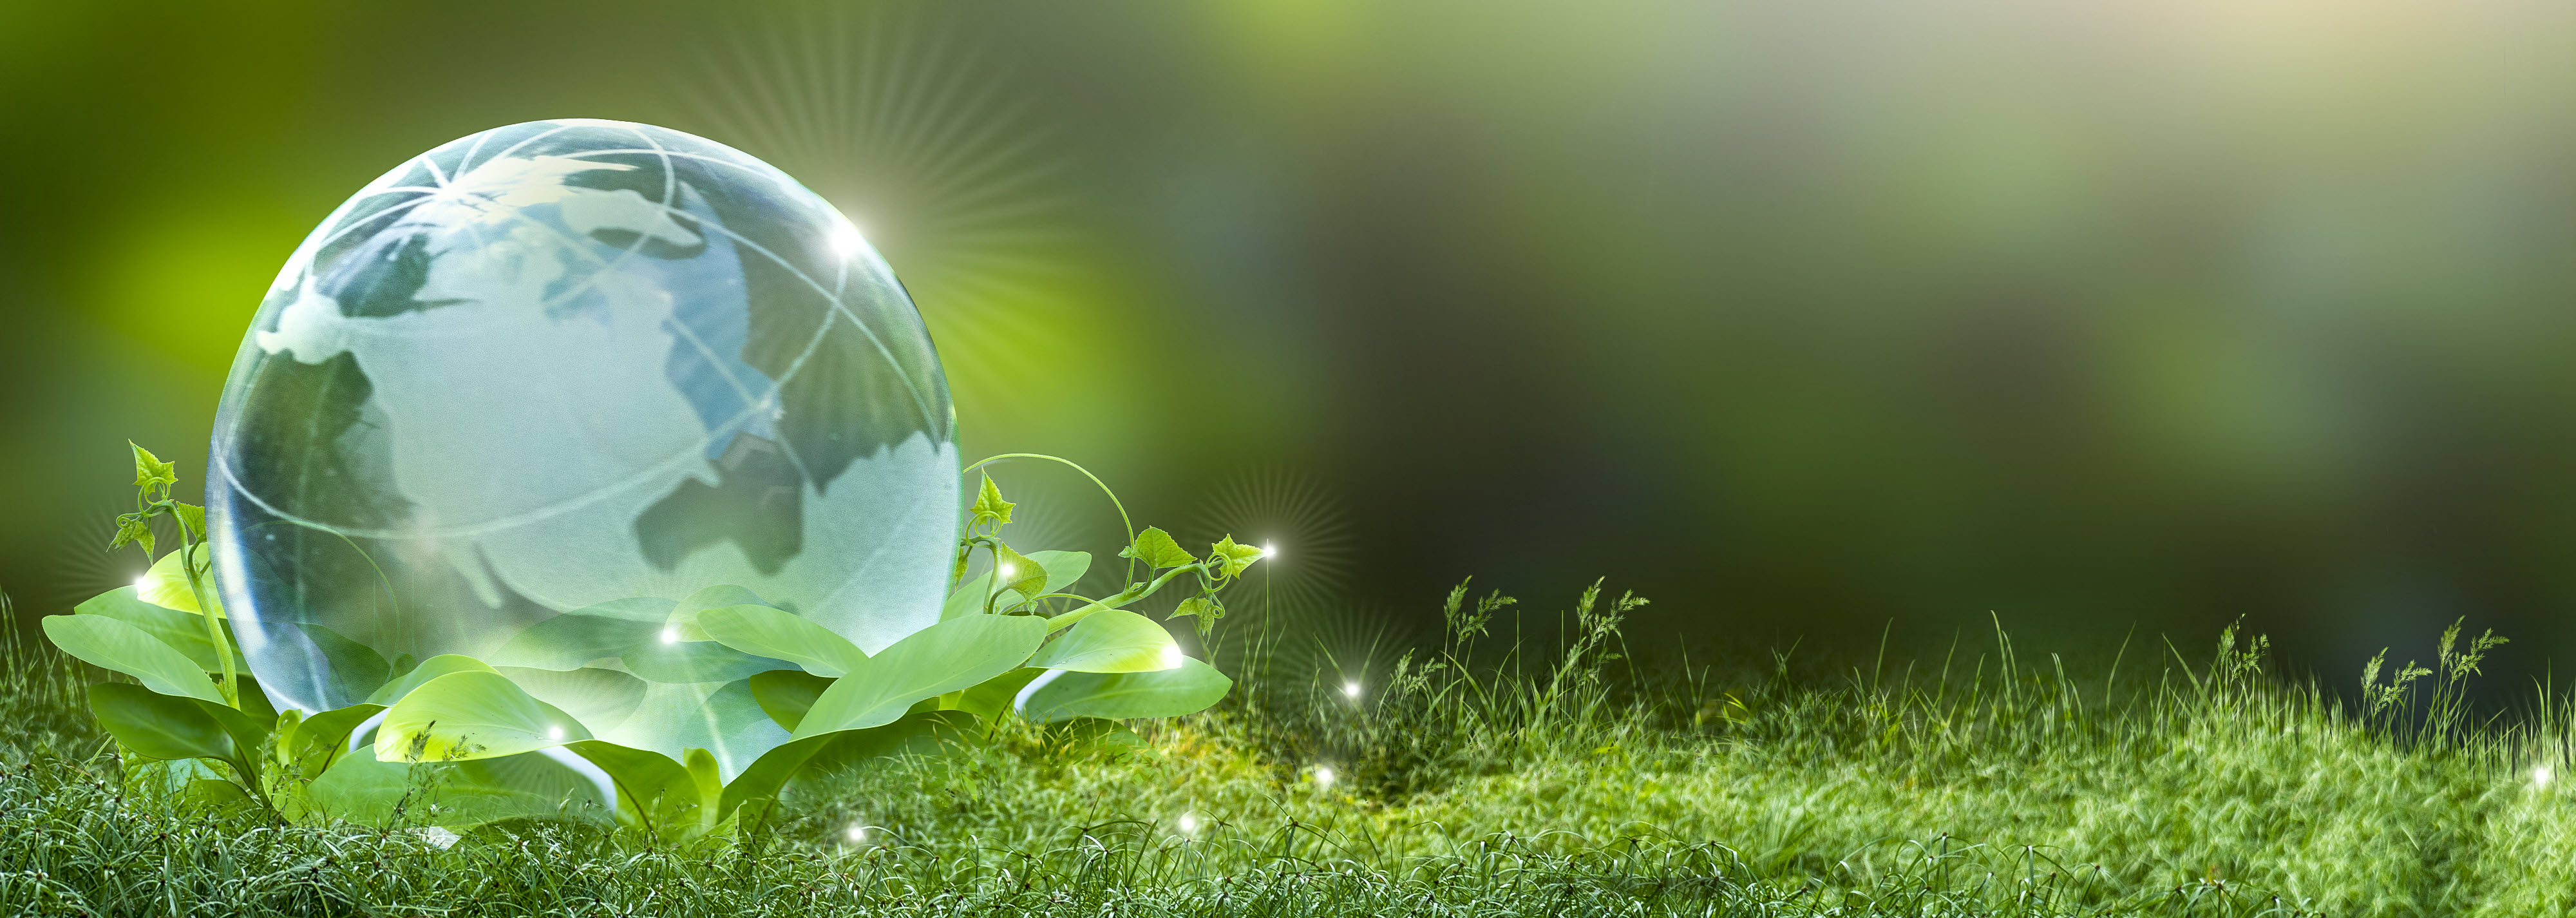 Erneuerbare-Energien-Konzept © iStock.com